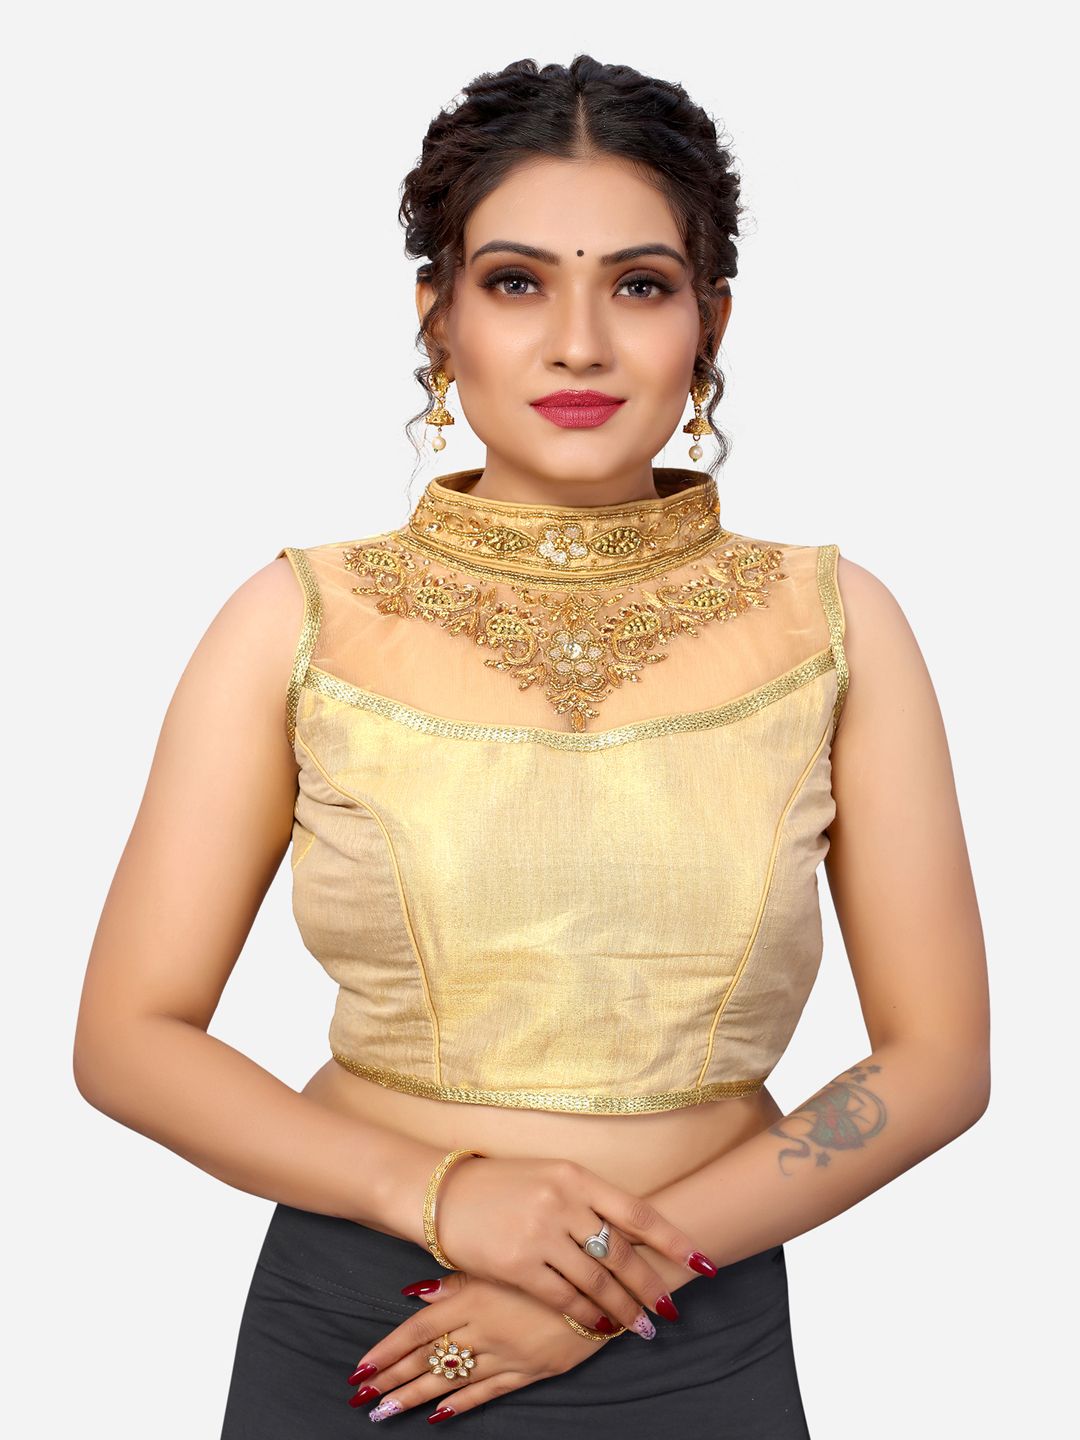 SIRIL Women Golden Embellished Silk Saree Blouse Price in India